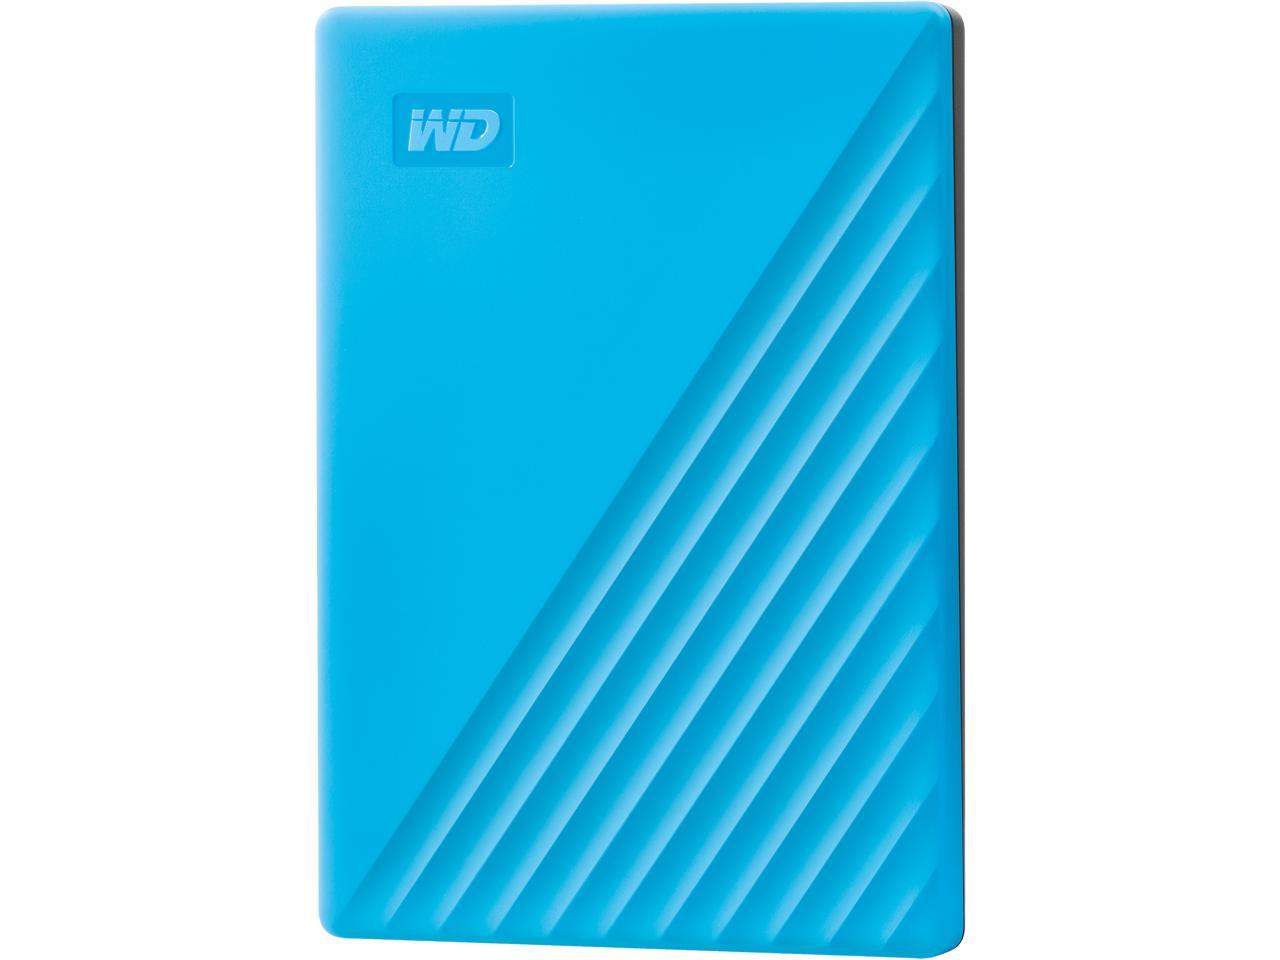 Wd 2Tb My Passport Portable Storage External Hard Drive Usb 3.2 For Pc/Mac Blue (Wdbyvg0020Bbl-Wesn)